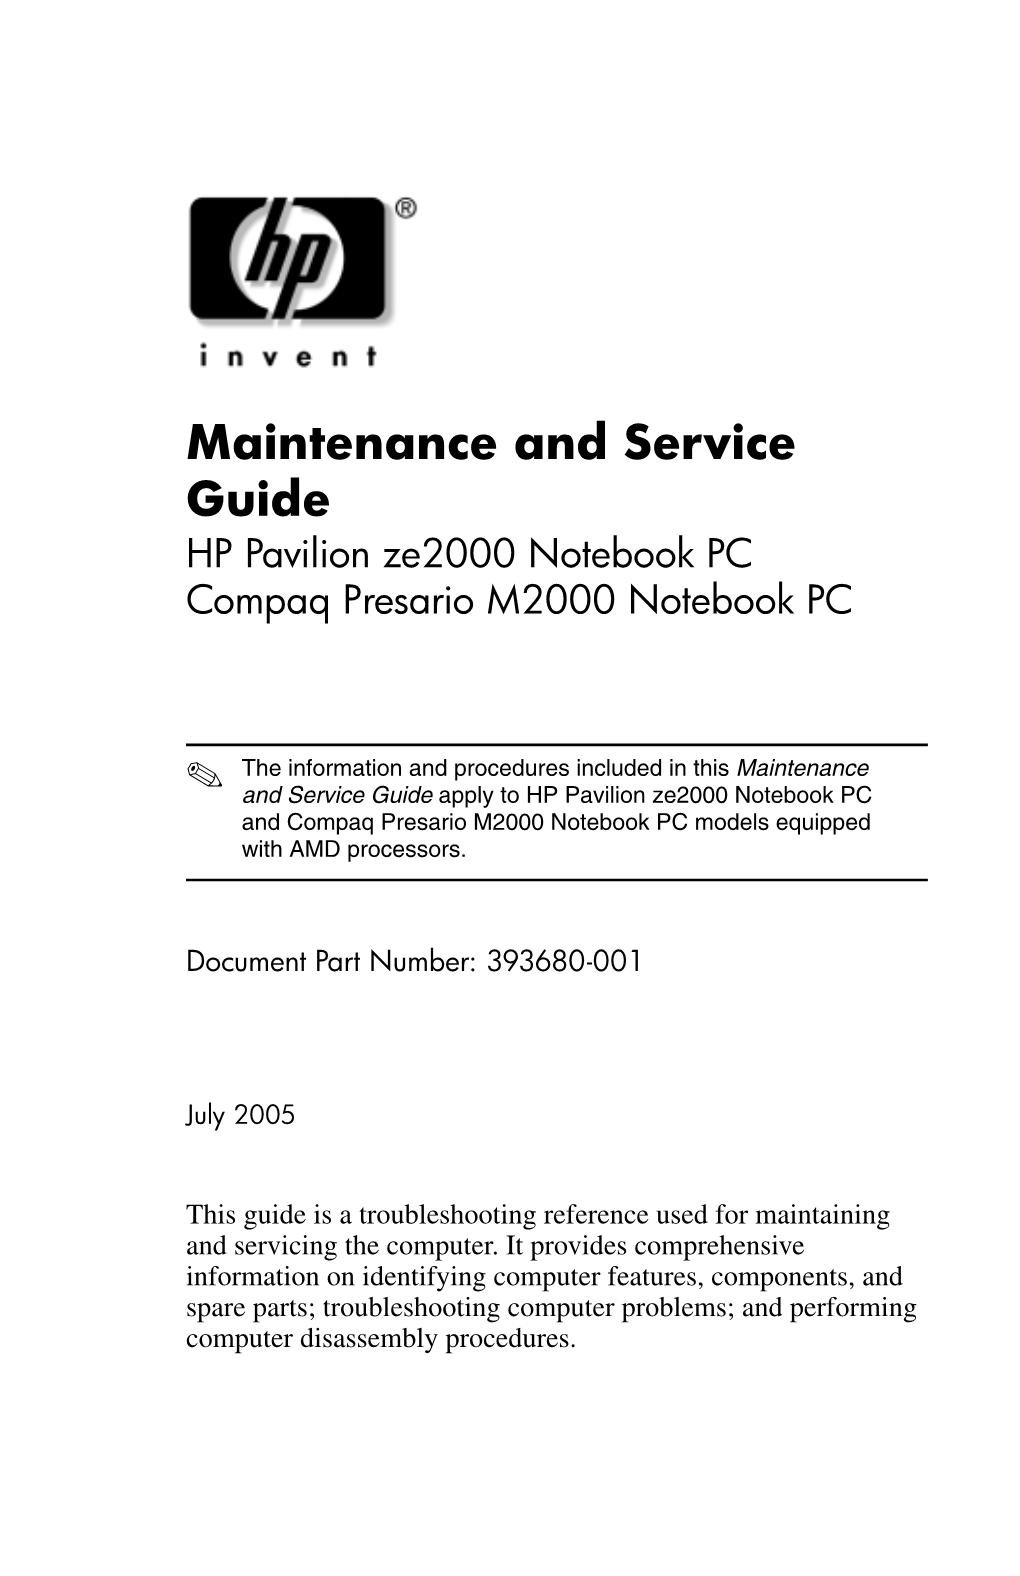 Maintenance and Service Guide HP Pavilion Ze2000 Notebook PC Compaq Presario M2000 Notebook PC